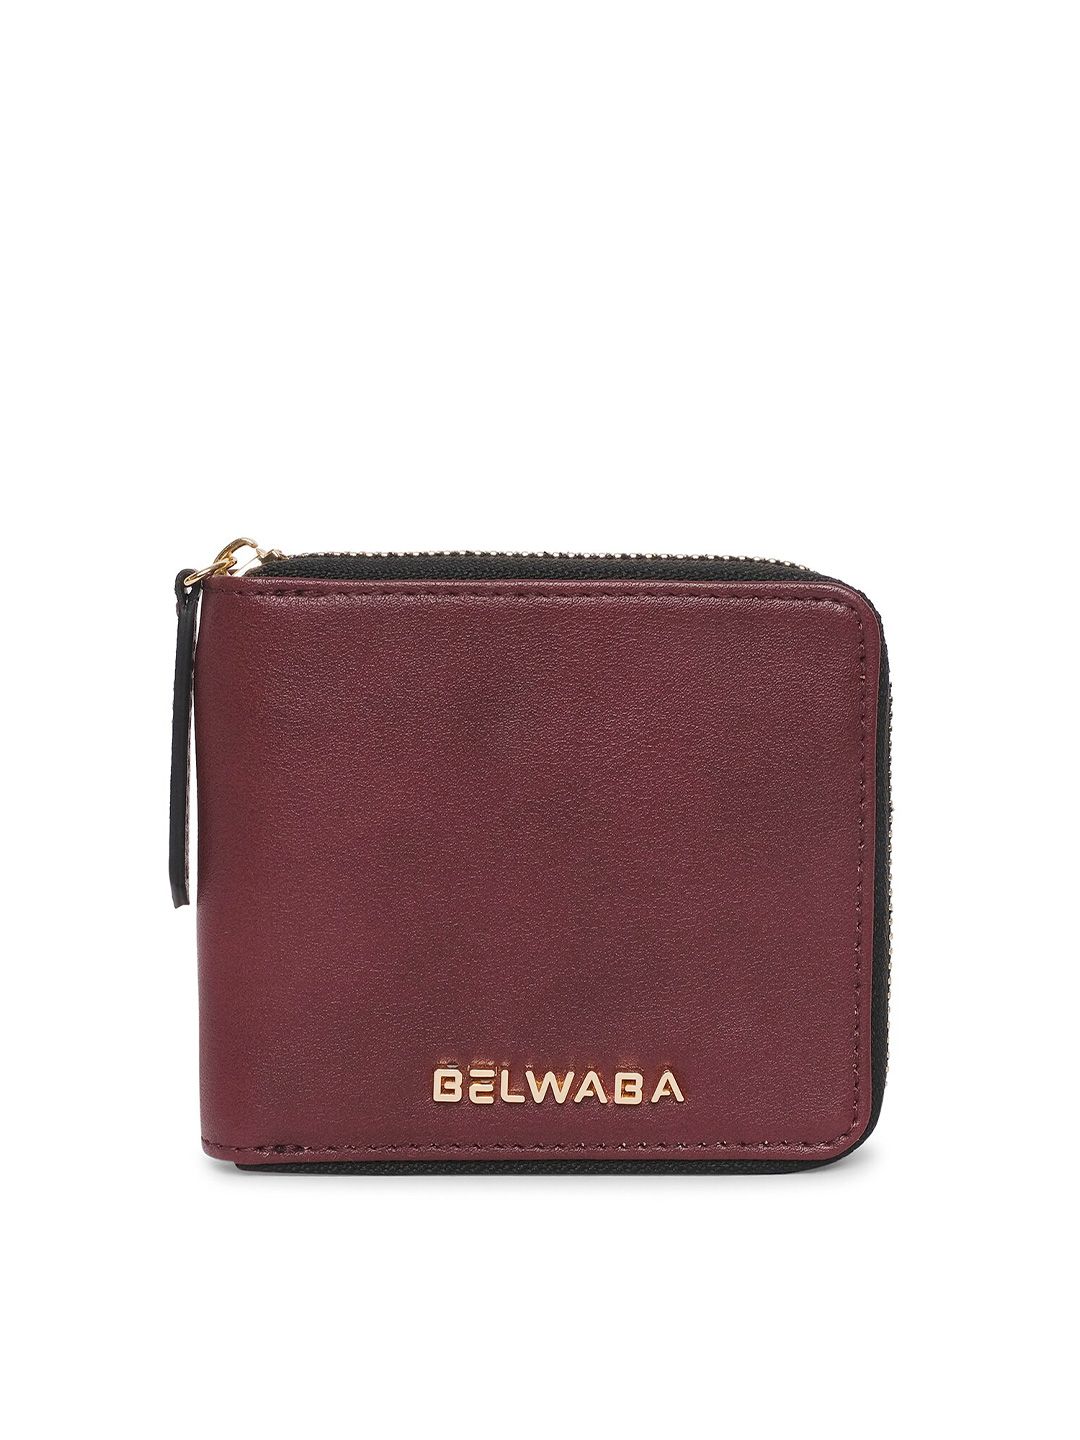 Belwaba Women Burgundy Textured PU Two Fold Wallet Price in India